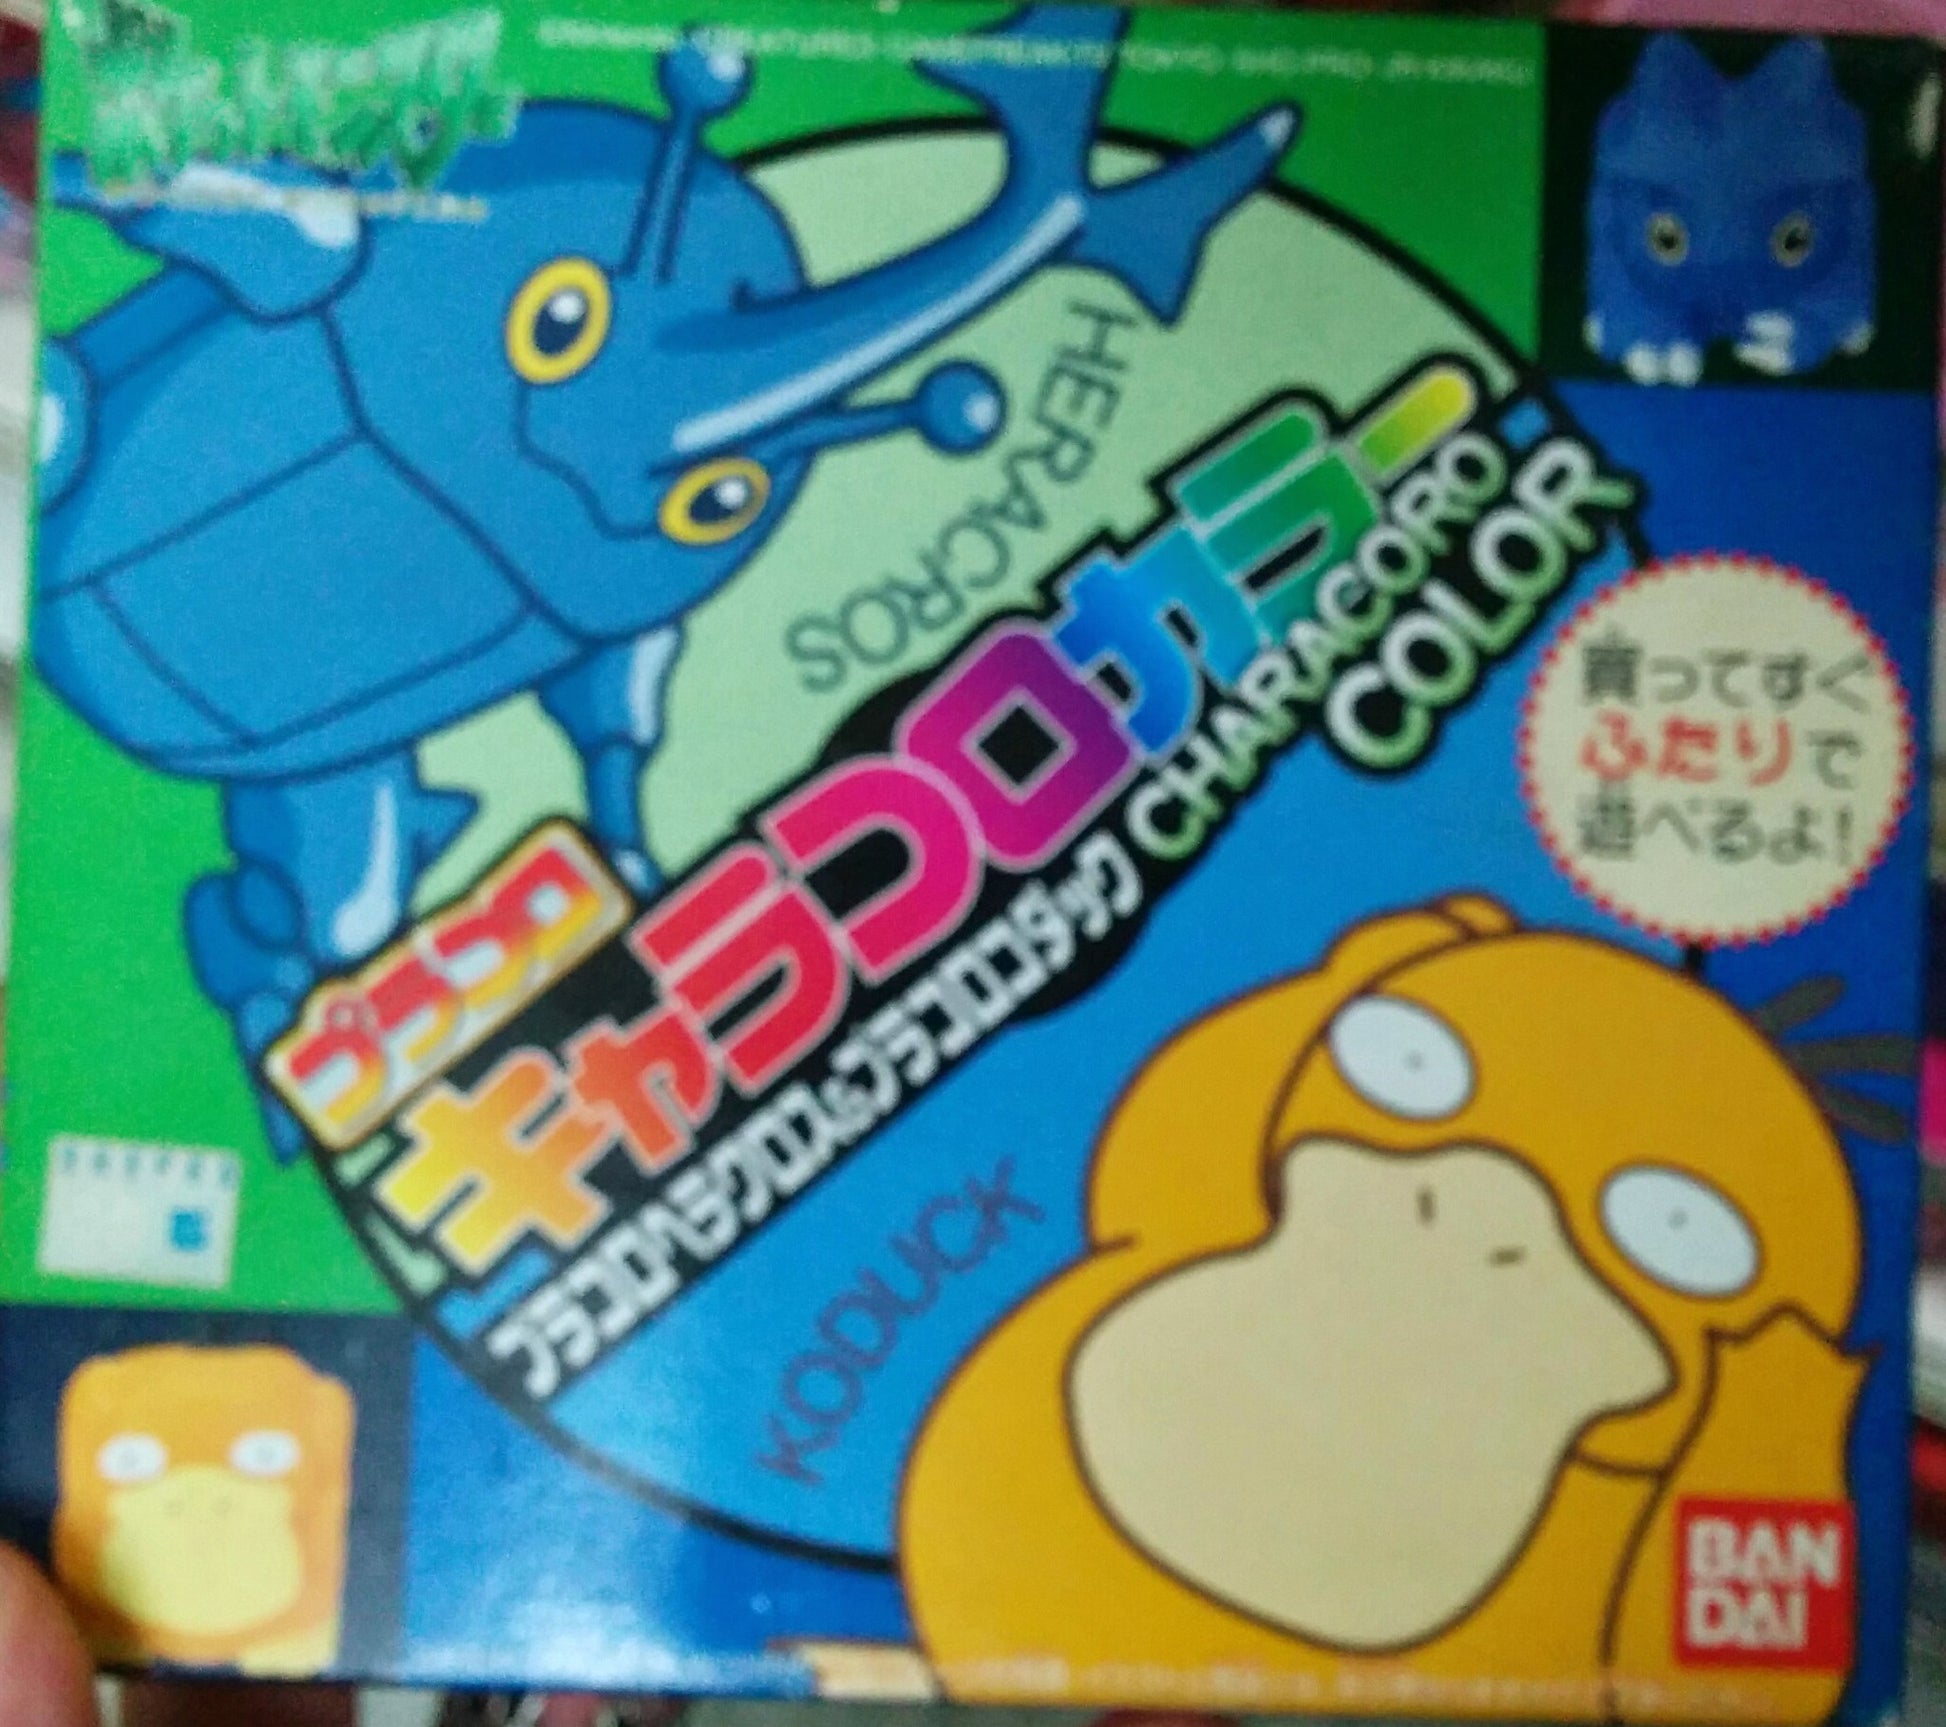 Bandai 1999 Pokemon Pocket Monster Characoro Color Heracros & Koduck Trading Figure Play Set - Lavits Figure
